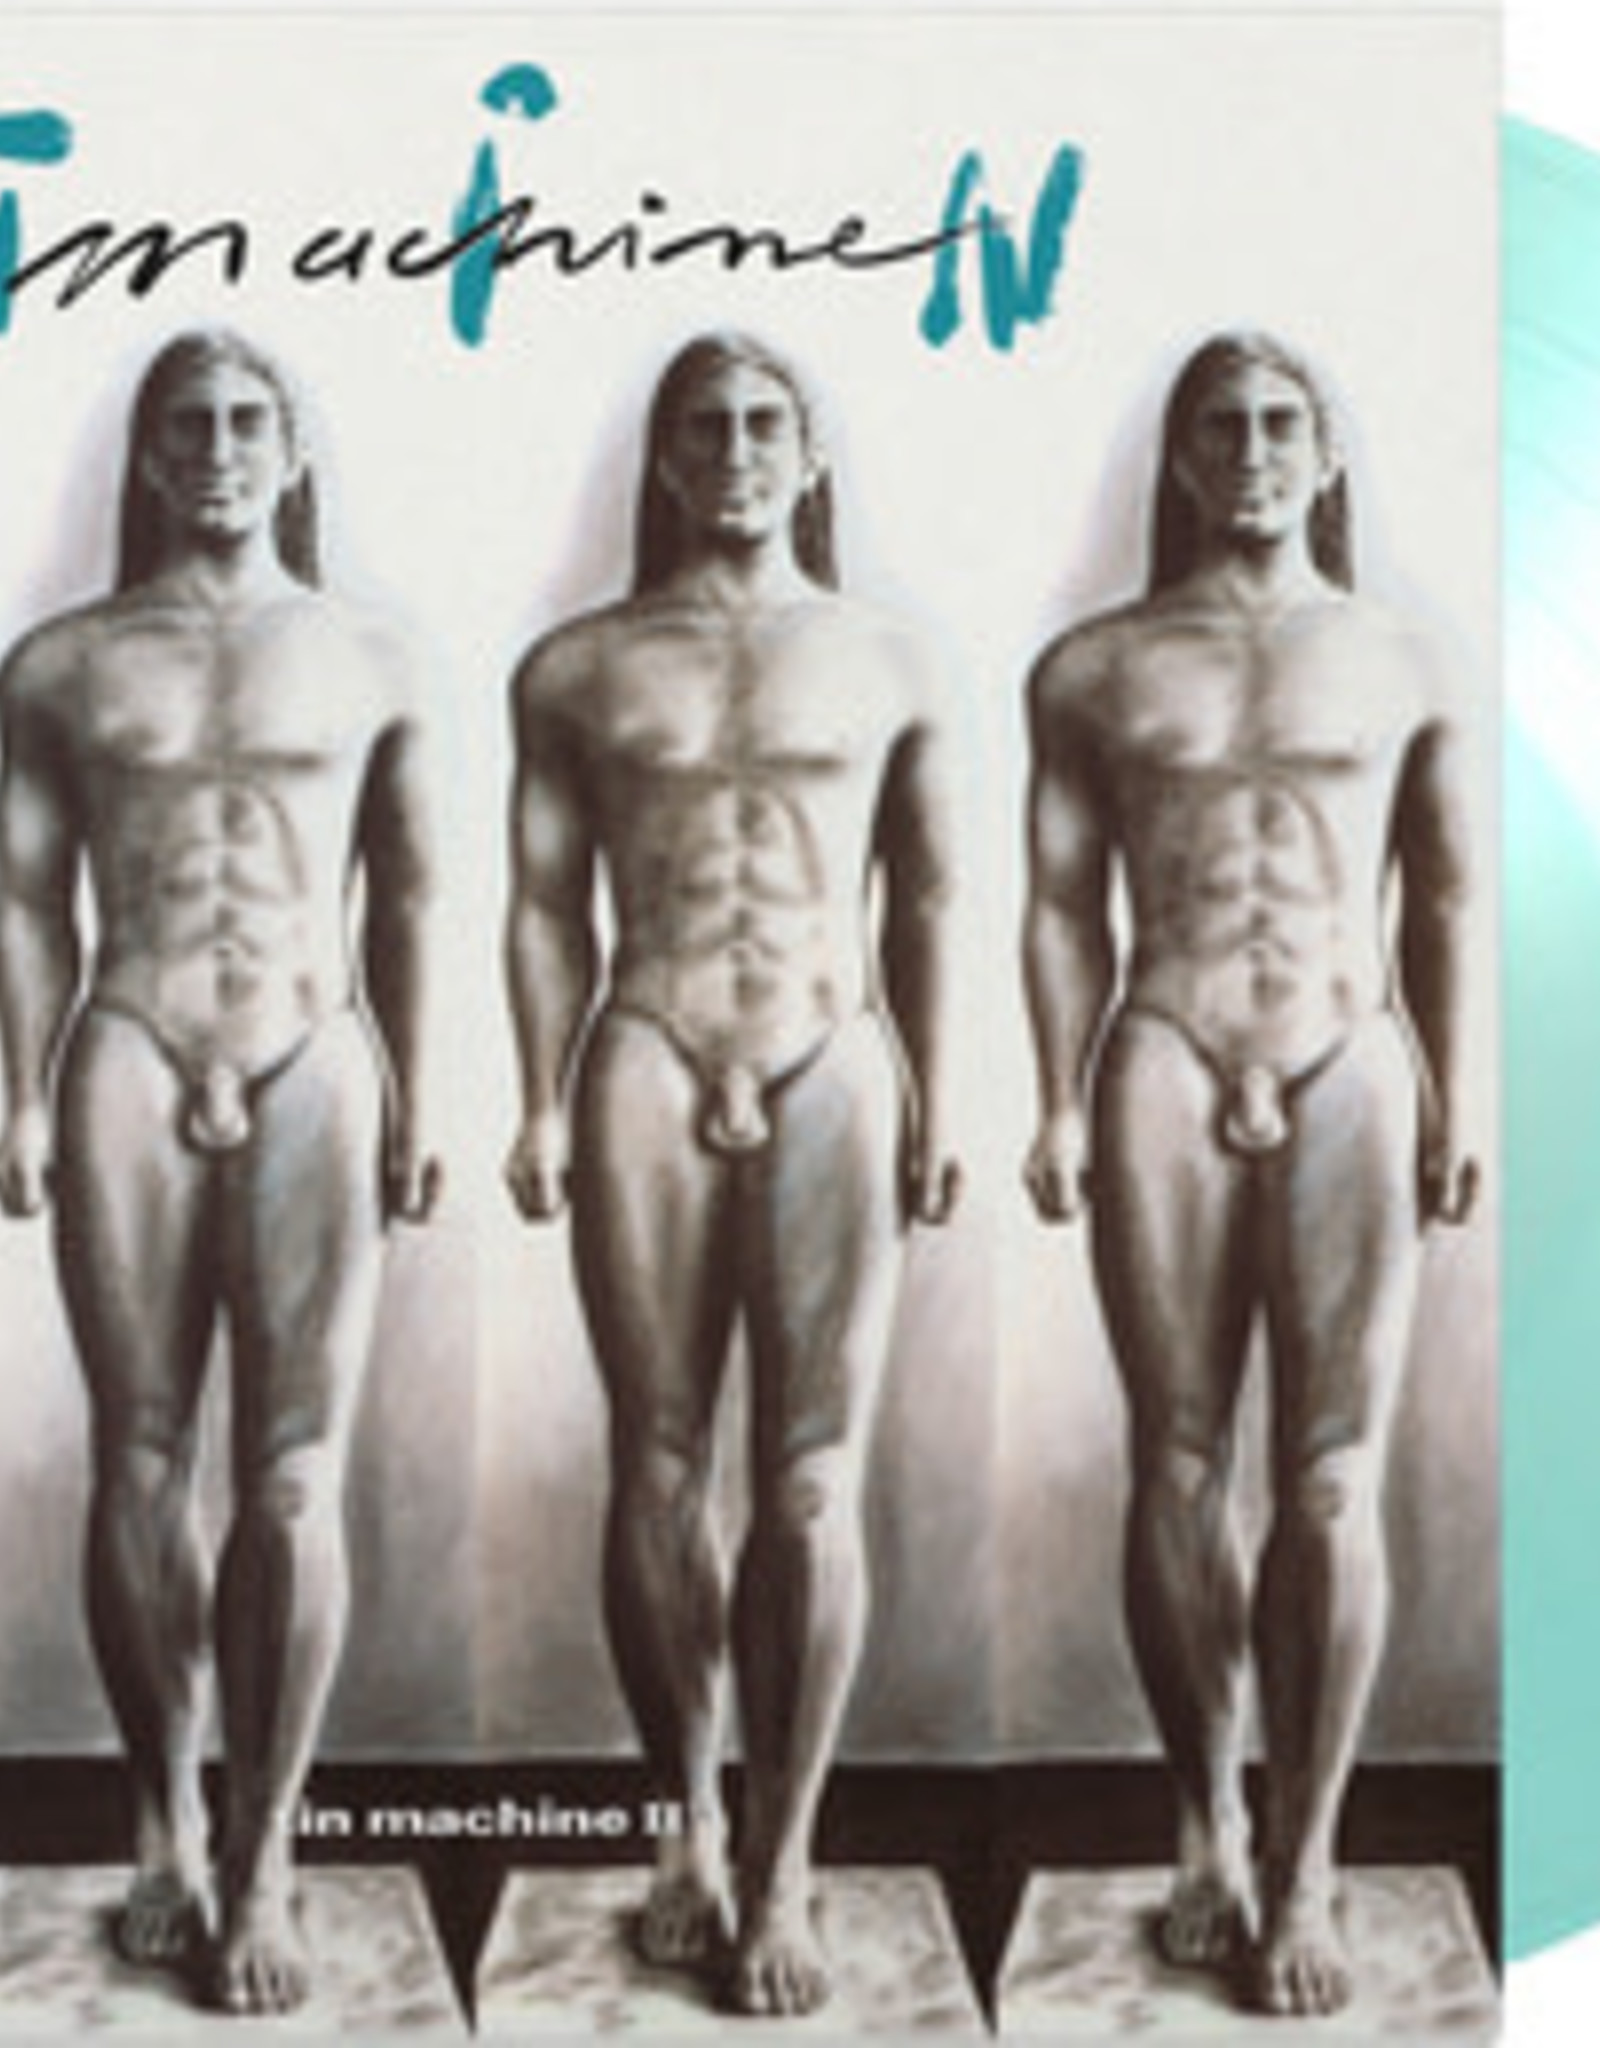 Tin Machine (David Bowie) - Tin Machine II (Crystal Clear/Turquoise Vinyl Numbered)